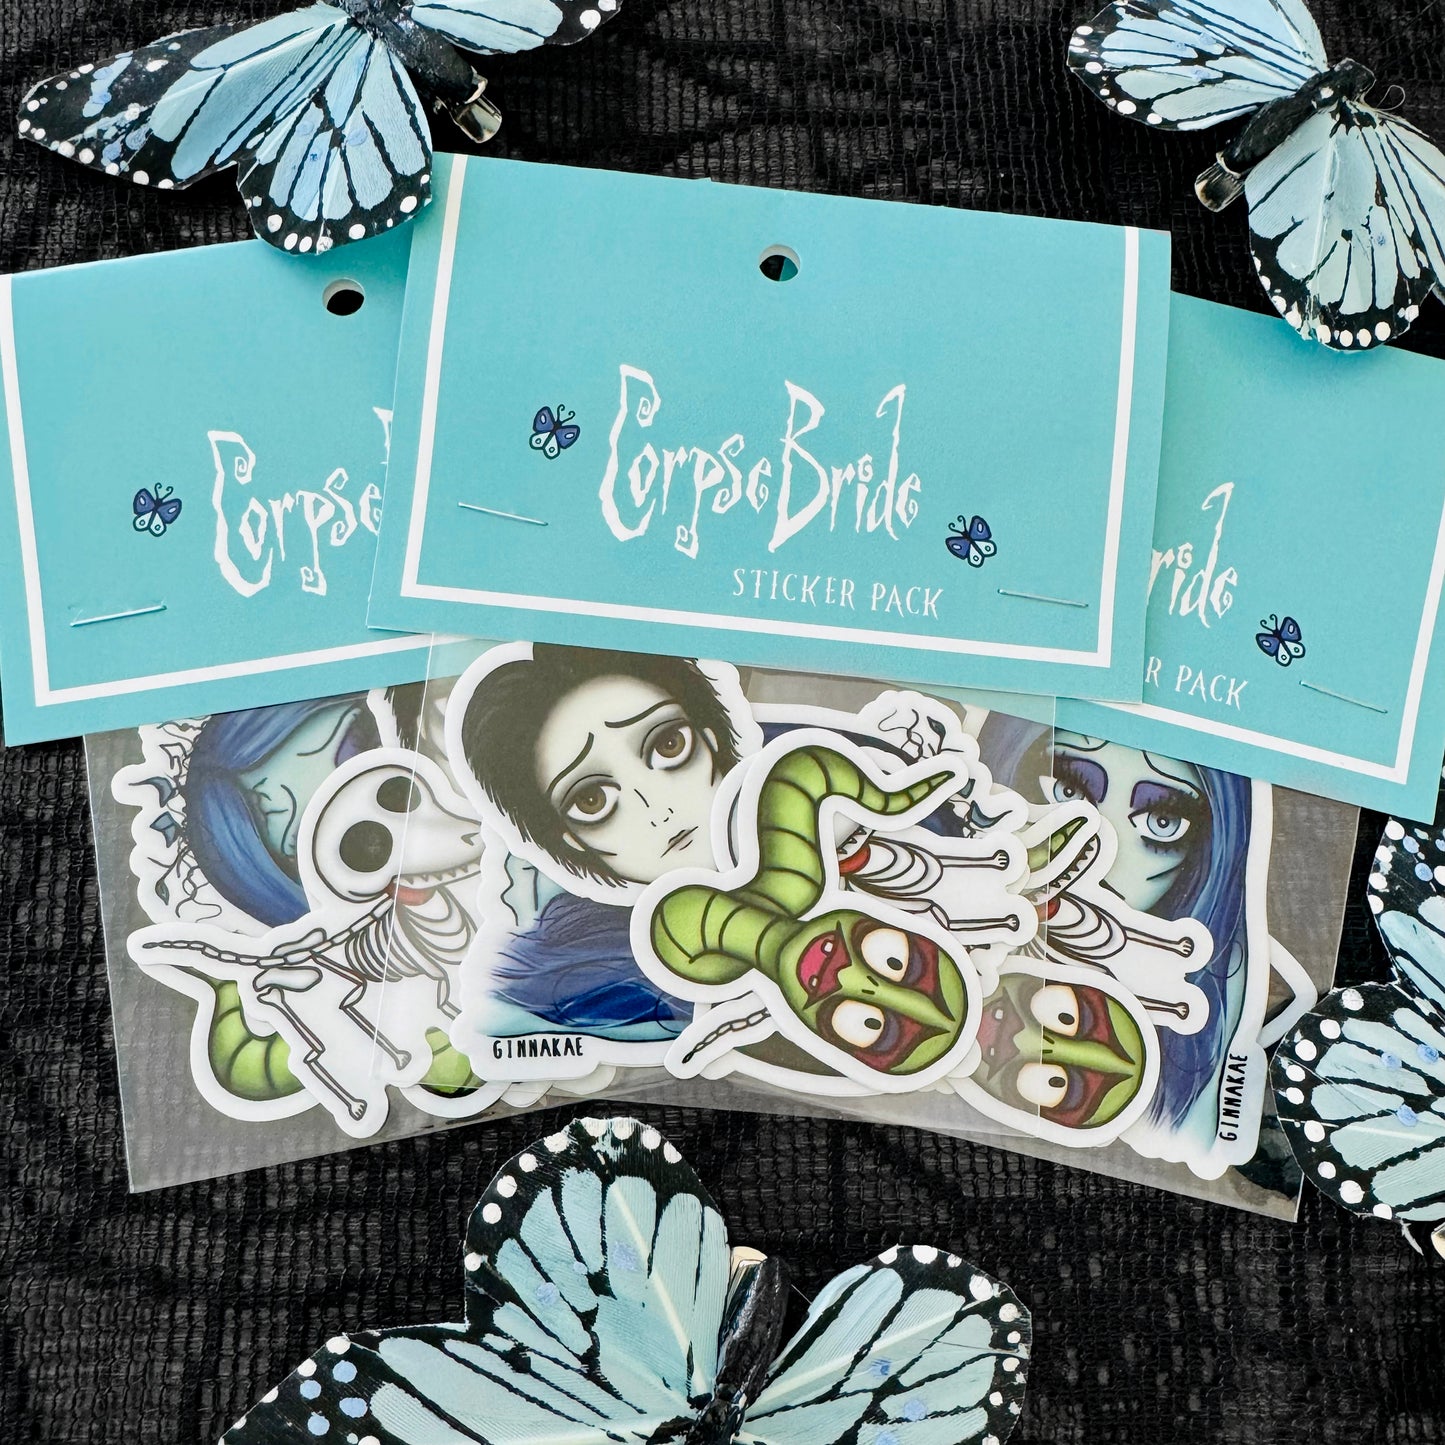 NEW! Corpse Bride Sticker Pack